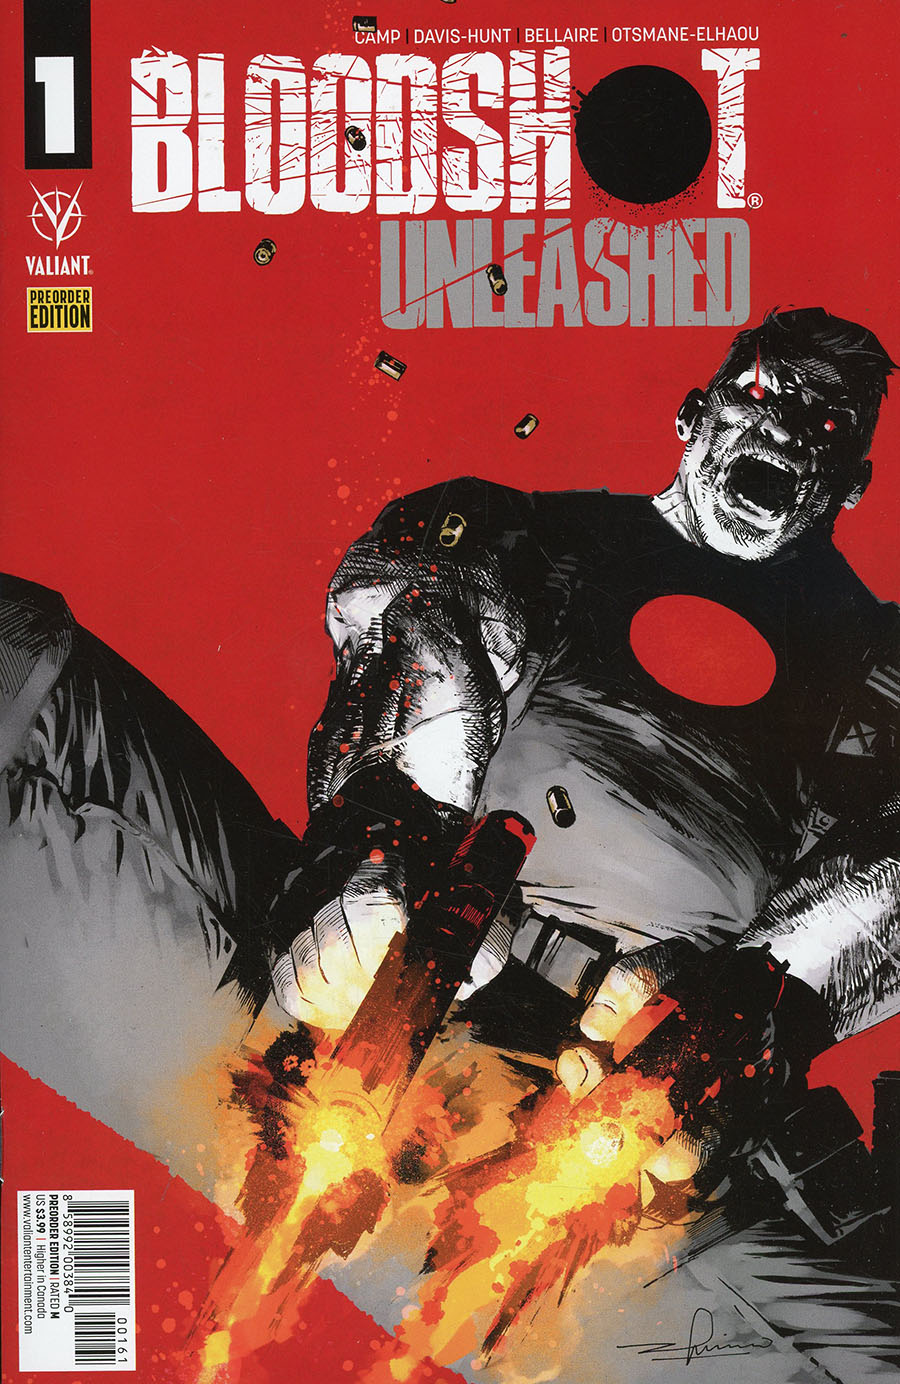 Bloodshot Unleashed #1 Cover F Variant Gerardo Zaffino Hard To Kill Pre-Order Edition